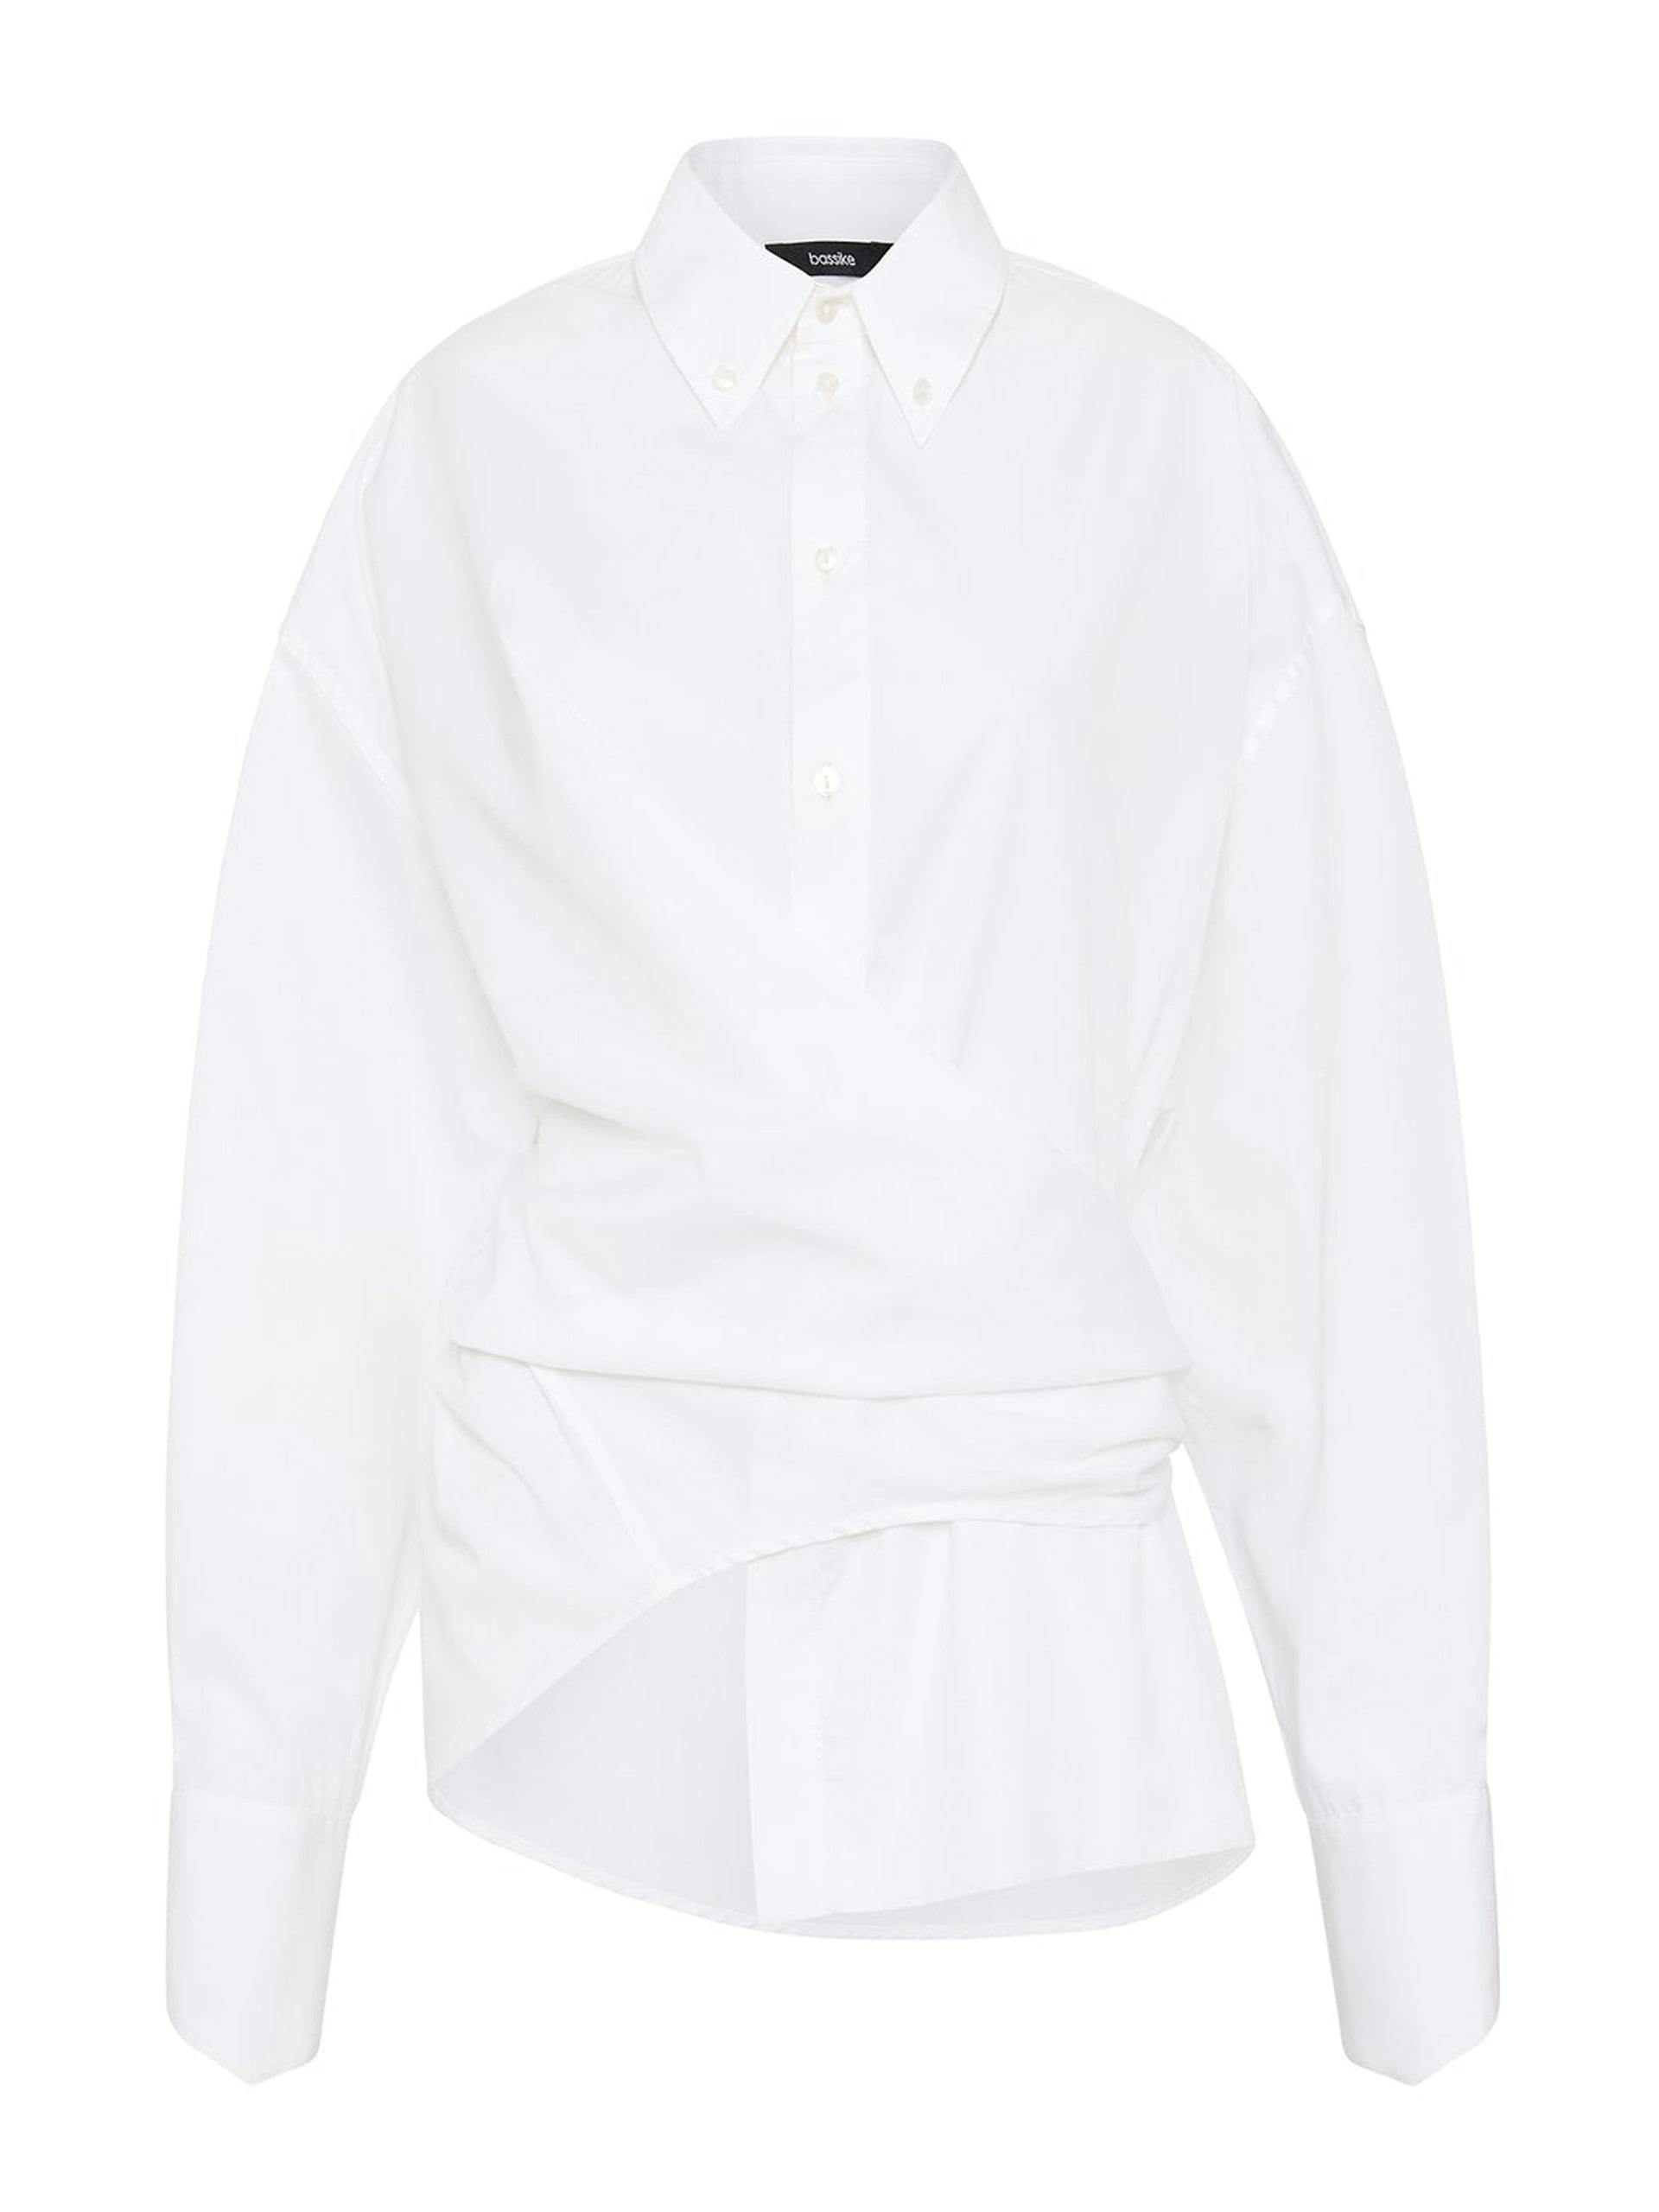 White parachute cotton wrap shirt